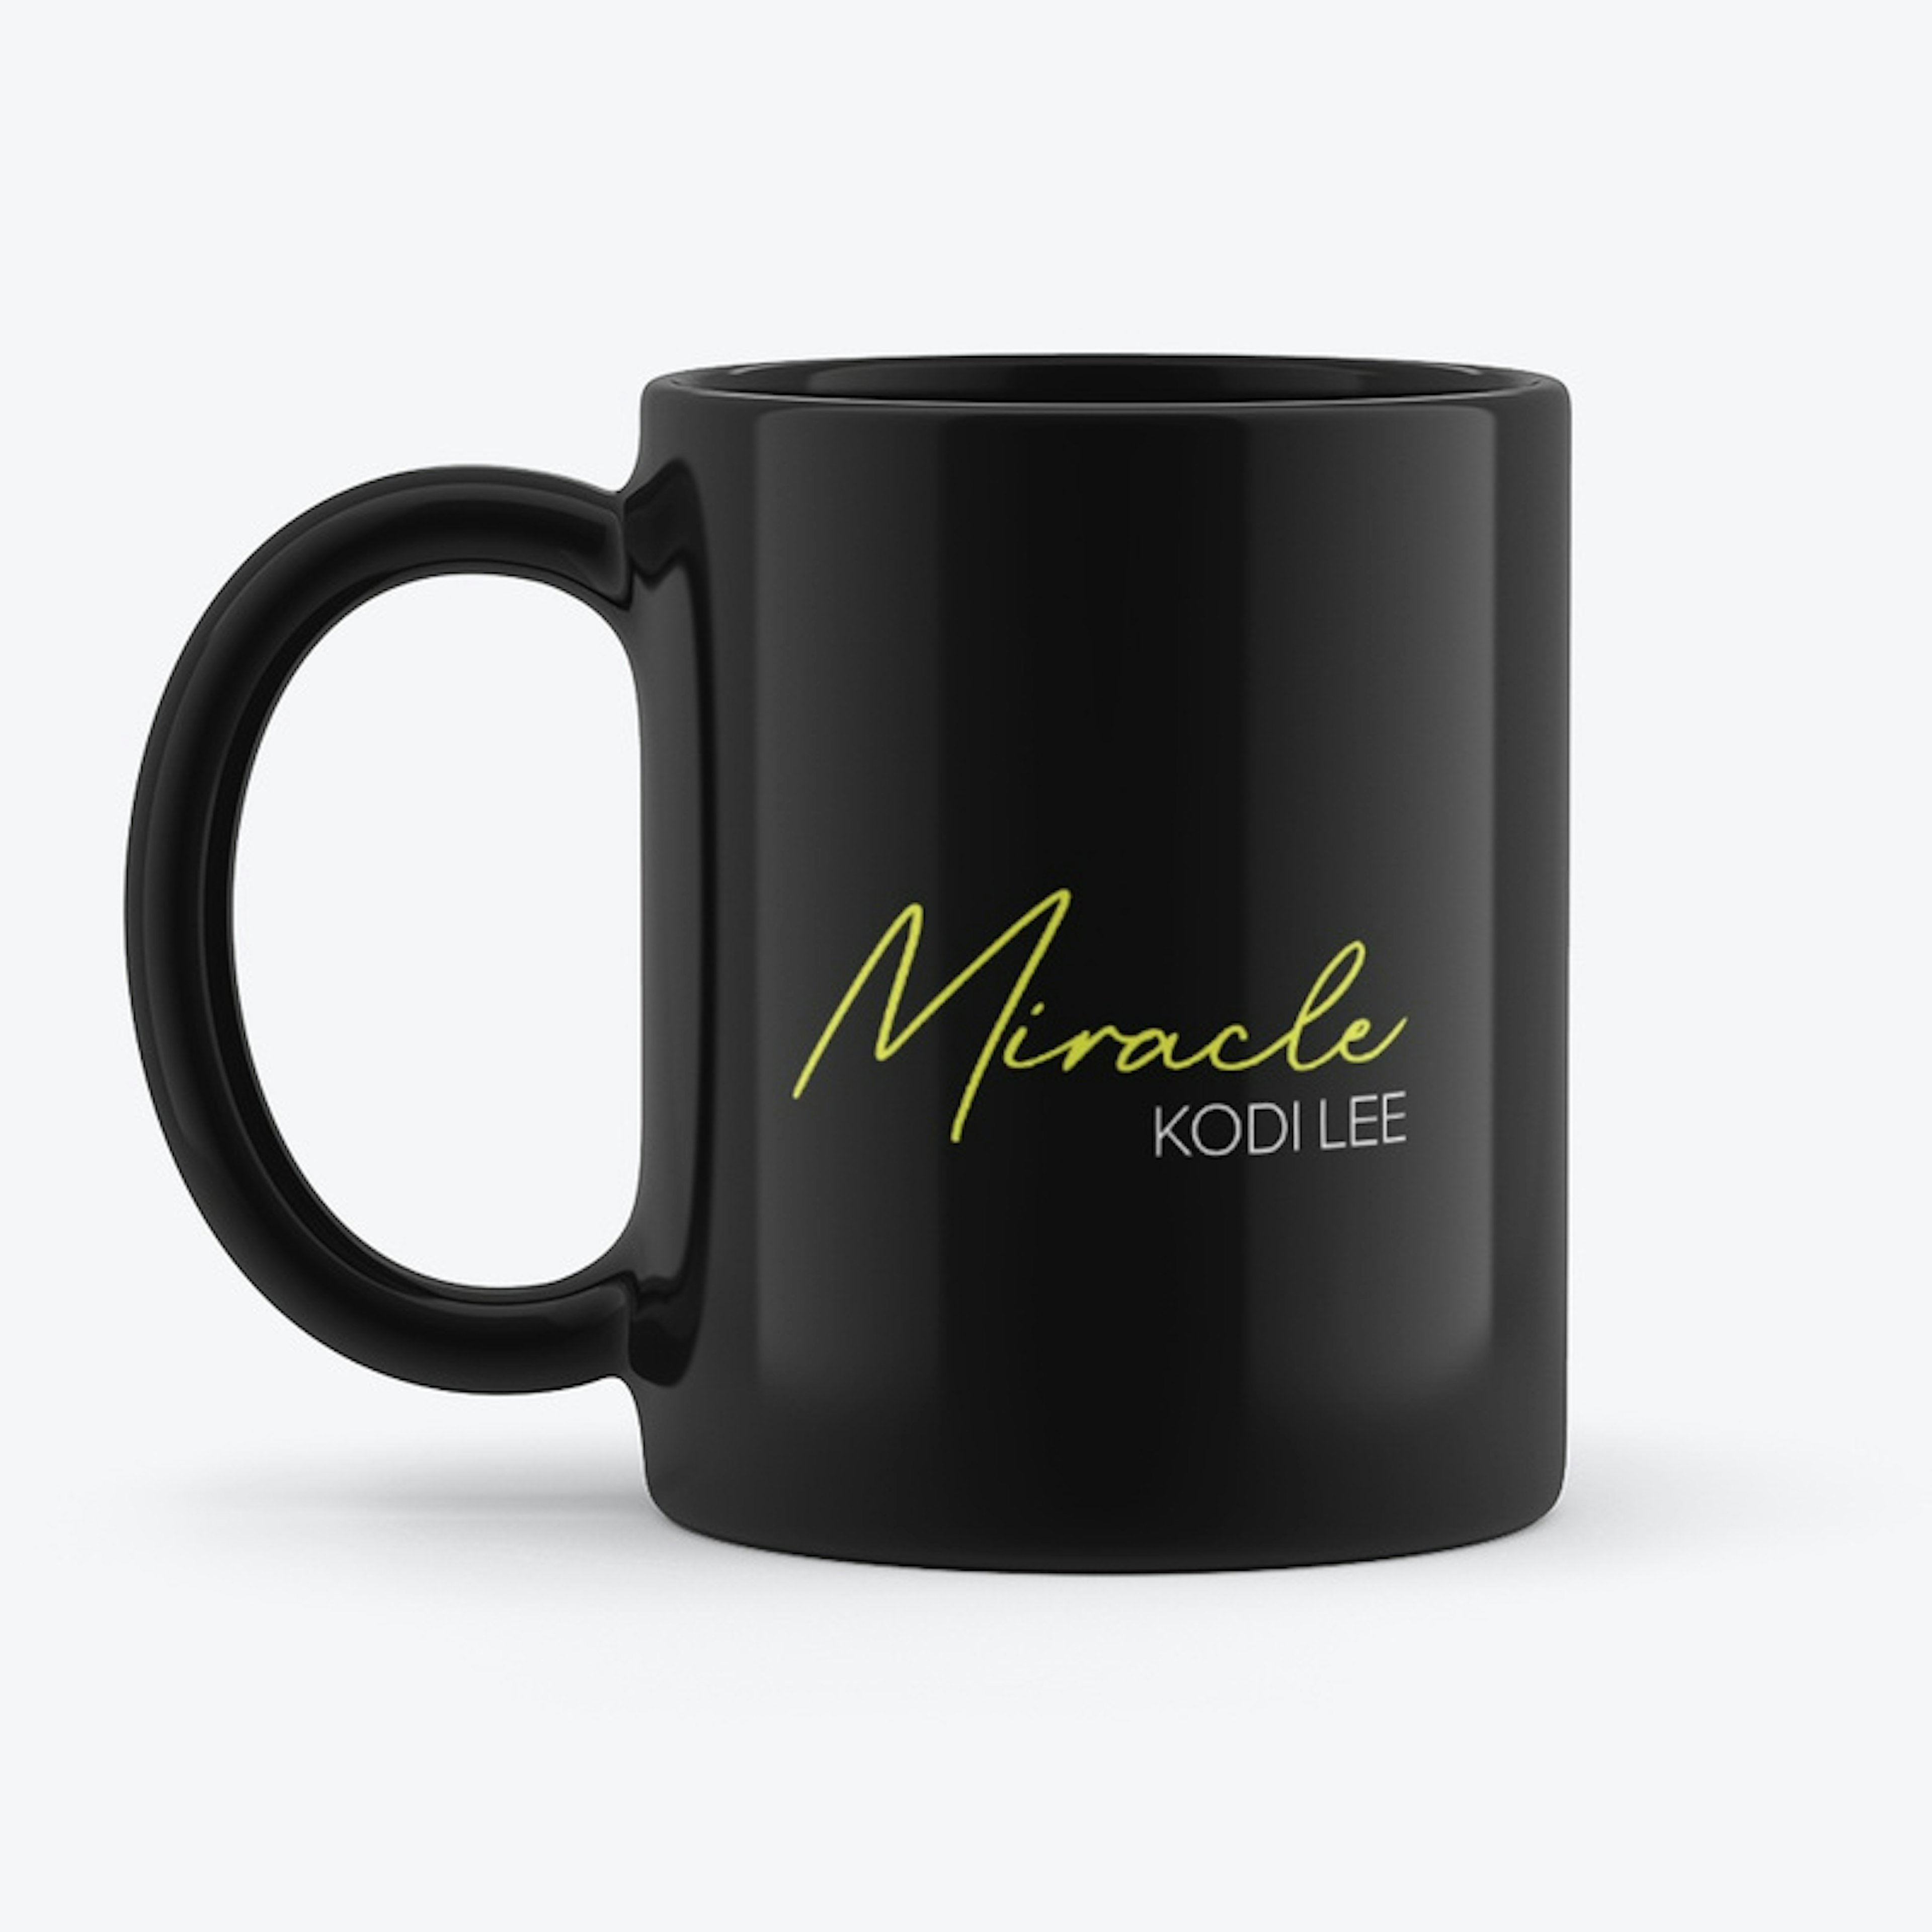 Kodi Lee - Miracle Mug